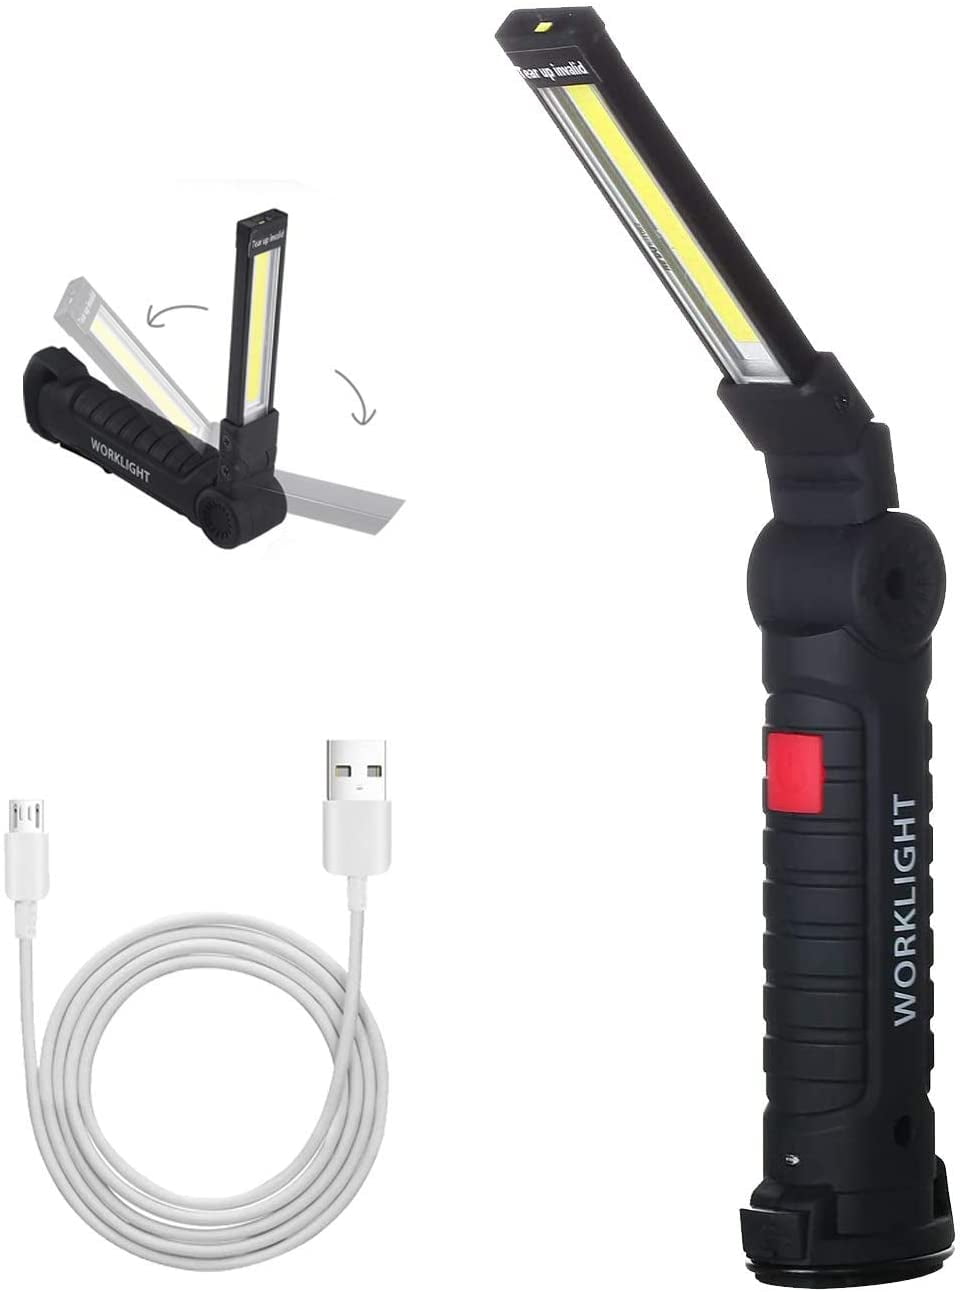 COB LED Slim Work Light USB Rechargeable Magnetic Folding Torch Lamp Flashlight 